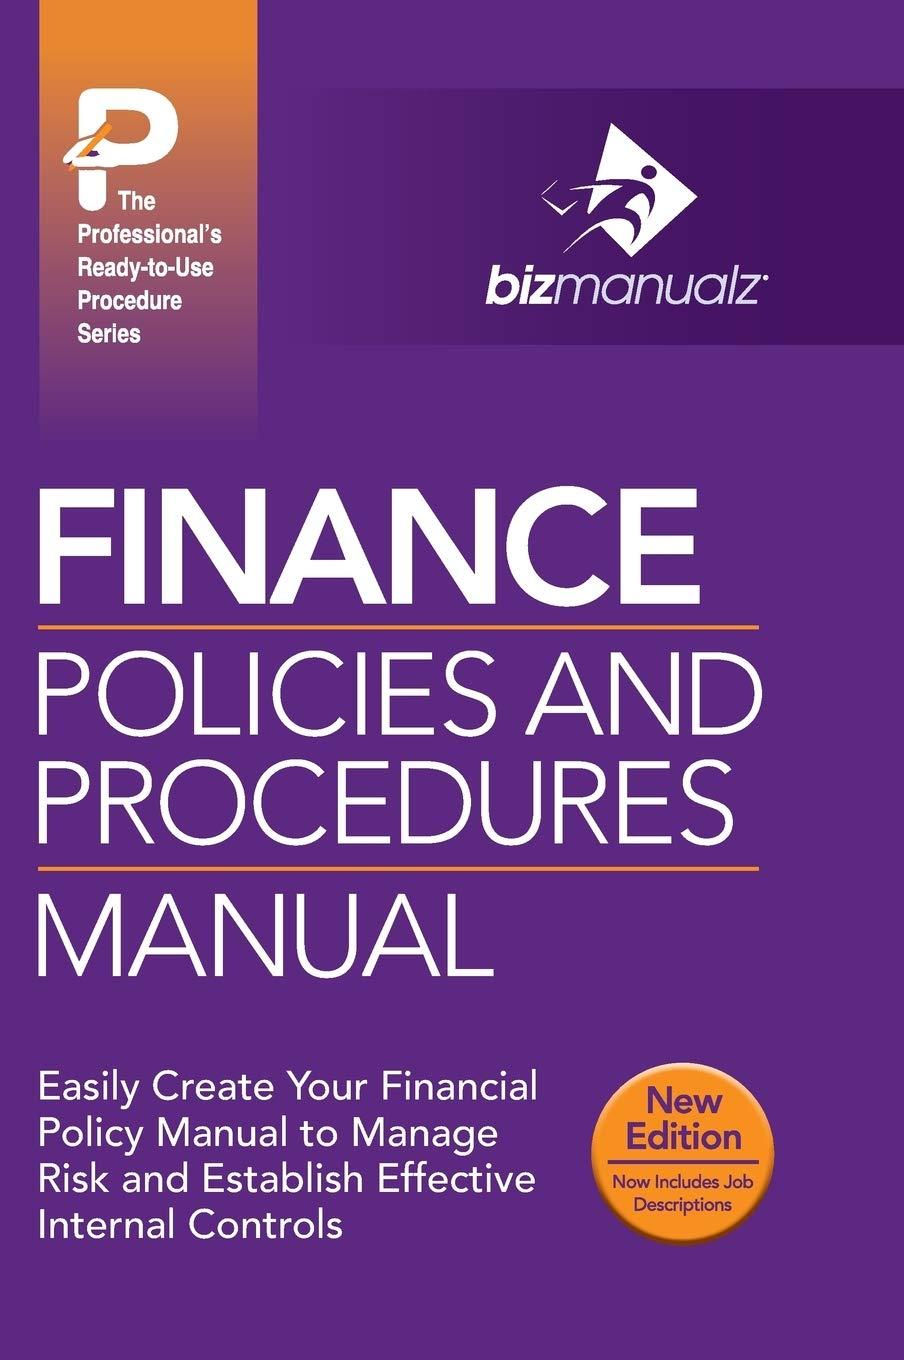 finance policies and procedures manual 1st edition inc bizmanualz 1931591040, 978-1931591041